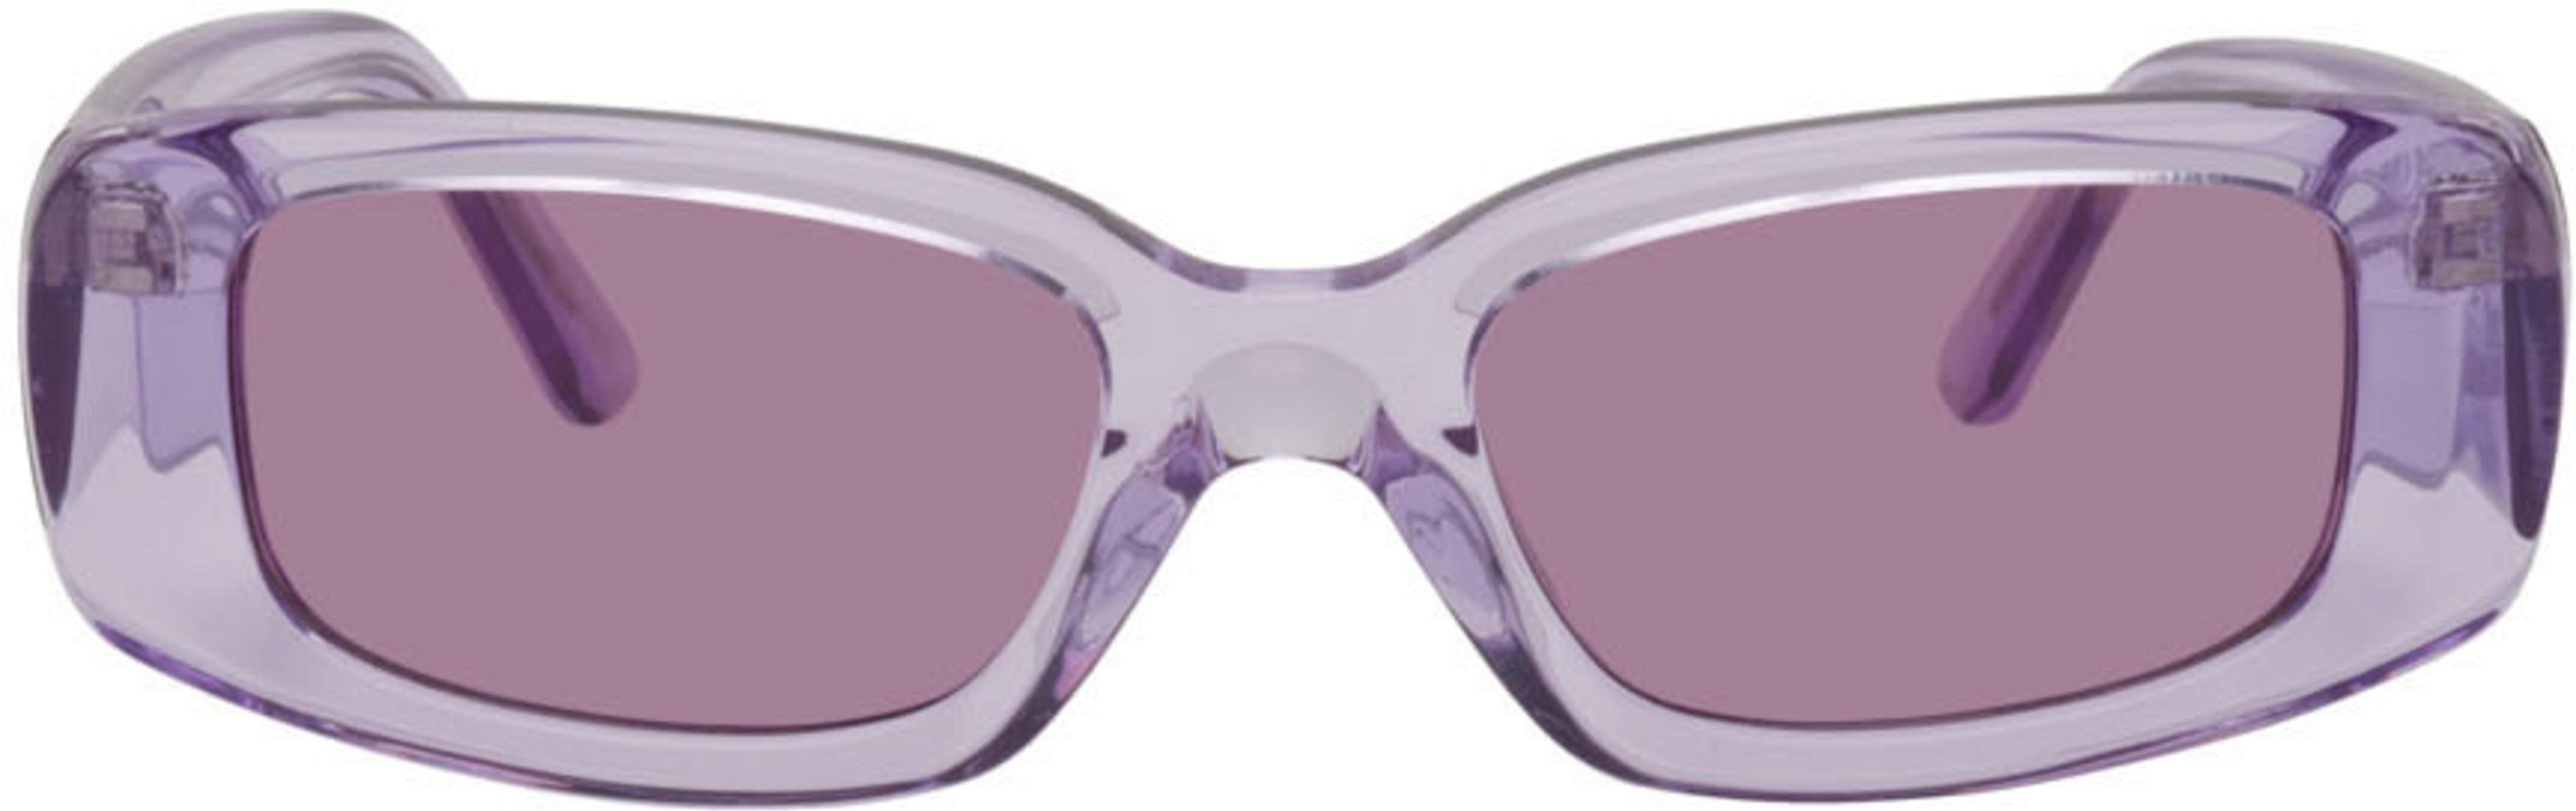 Purple 10.2 Sunglasses by CHIMI